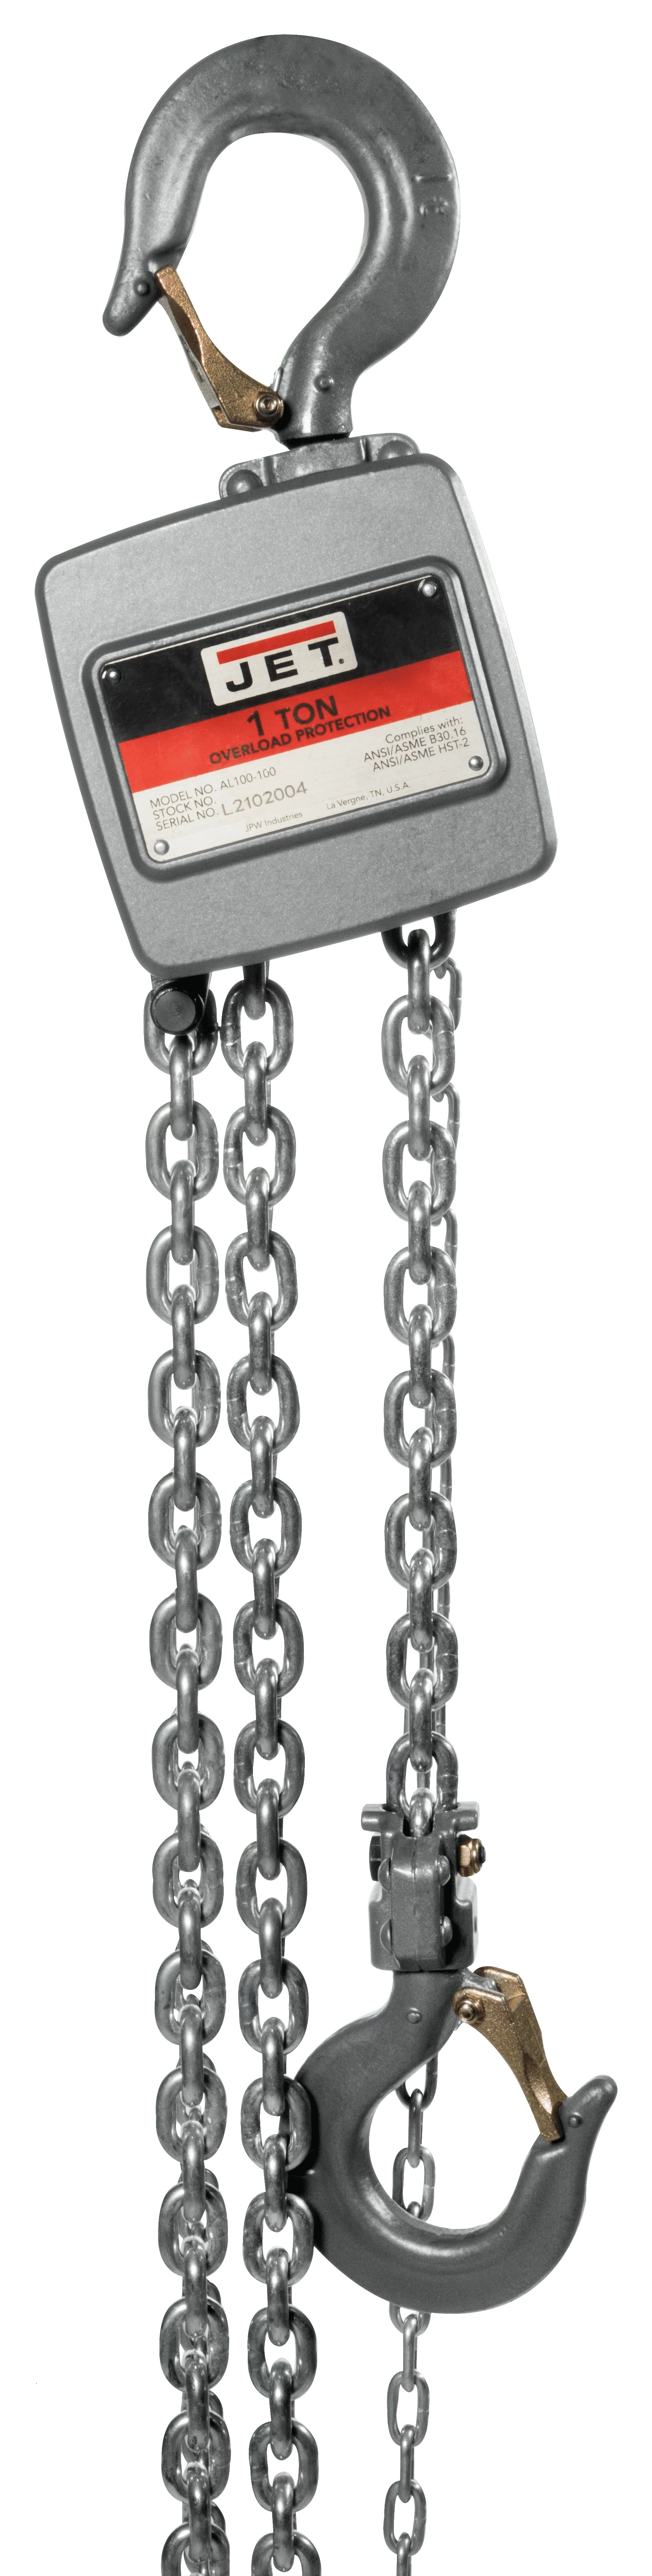 AL100-100-15 1 Ton Aluminum Hand Chain Hoist with 15ft of Lift